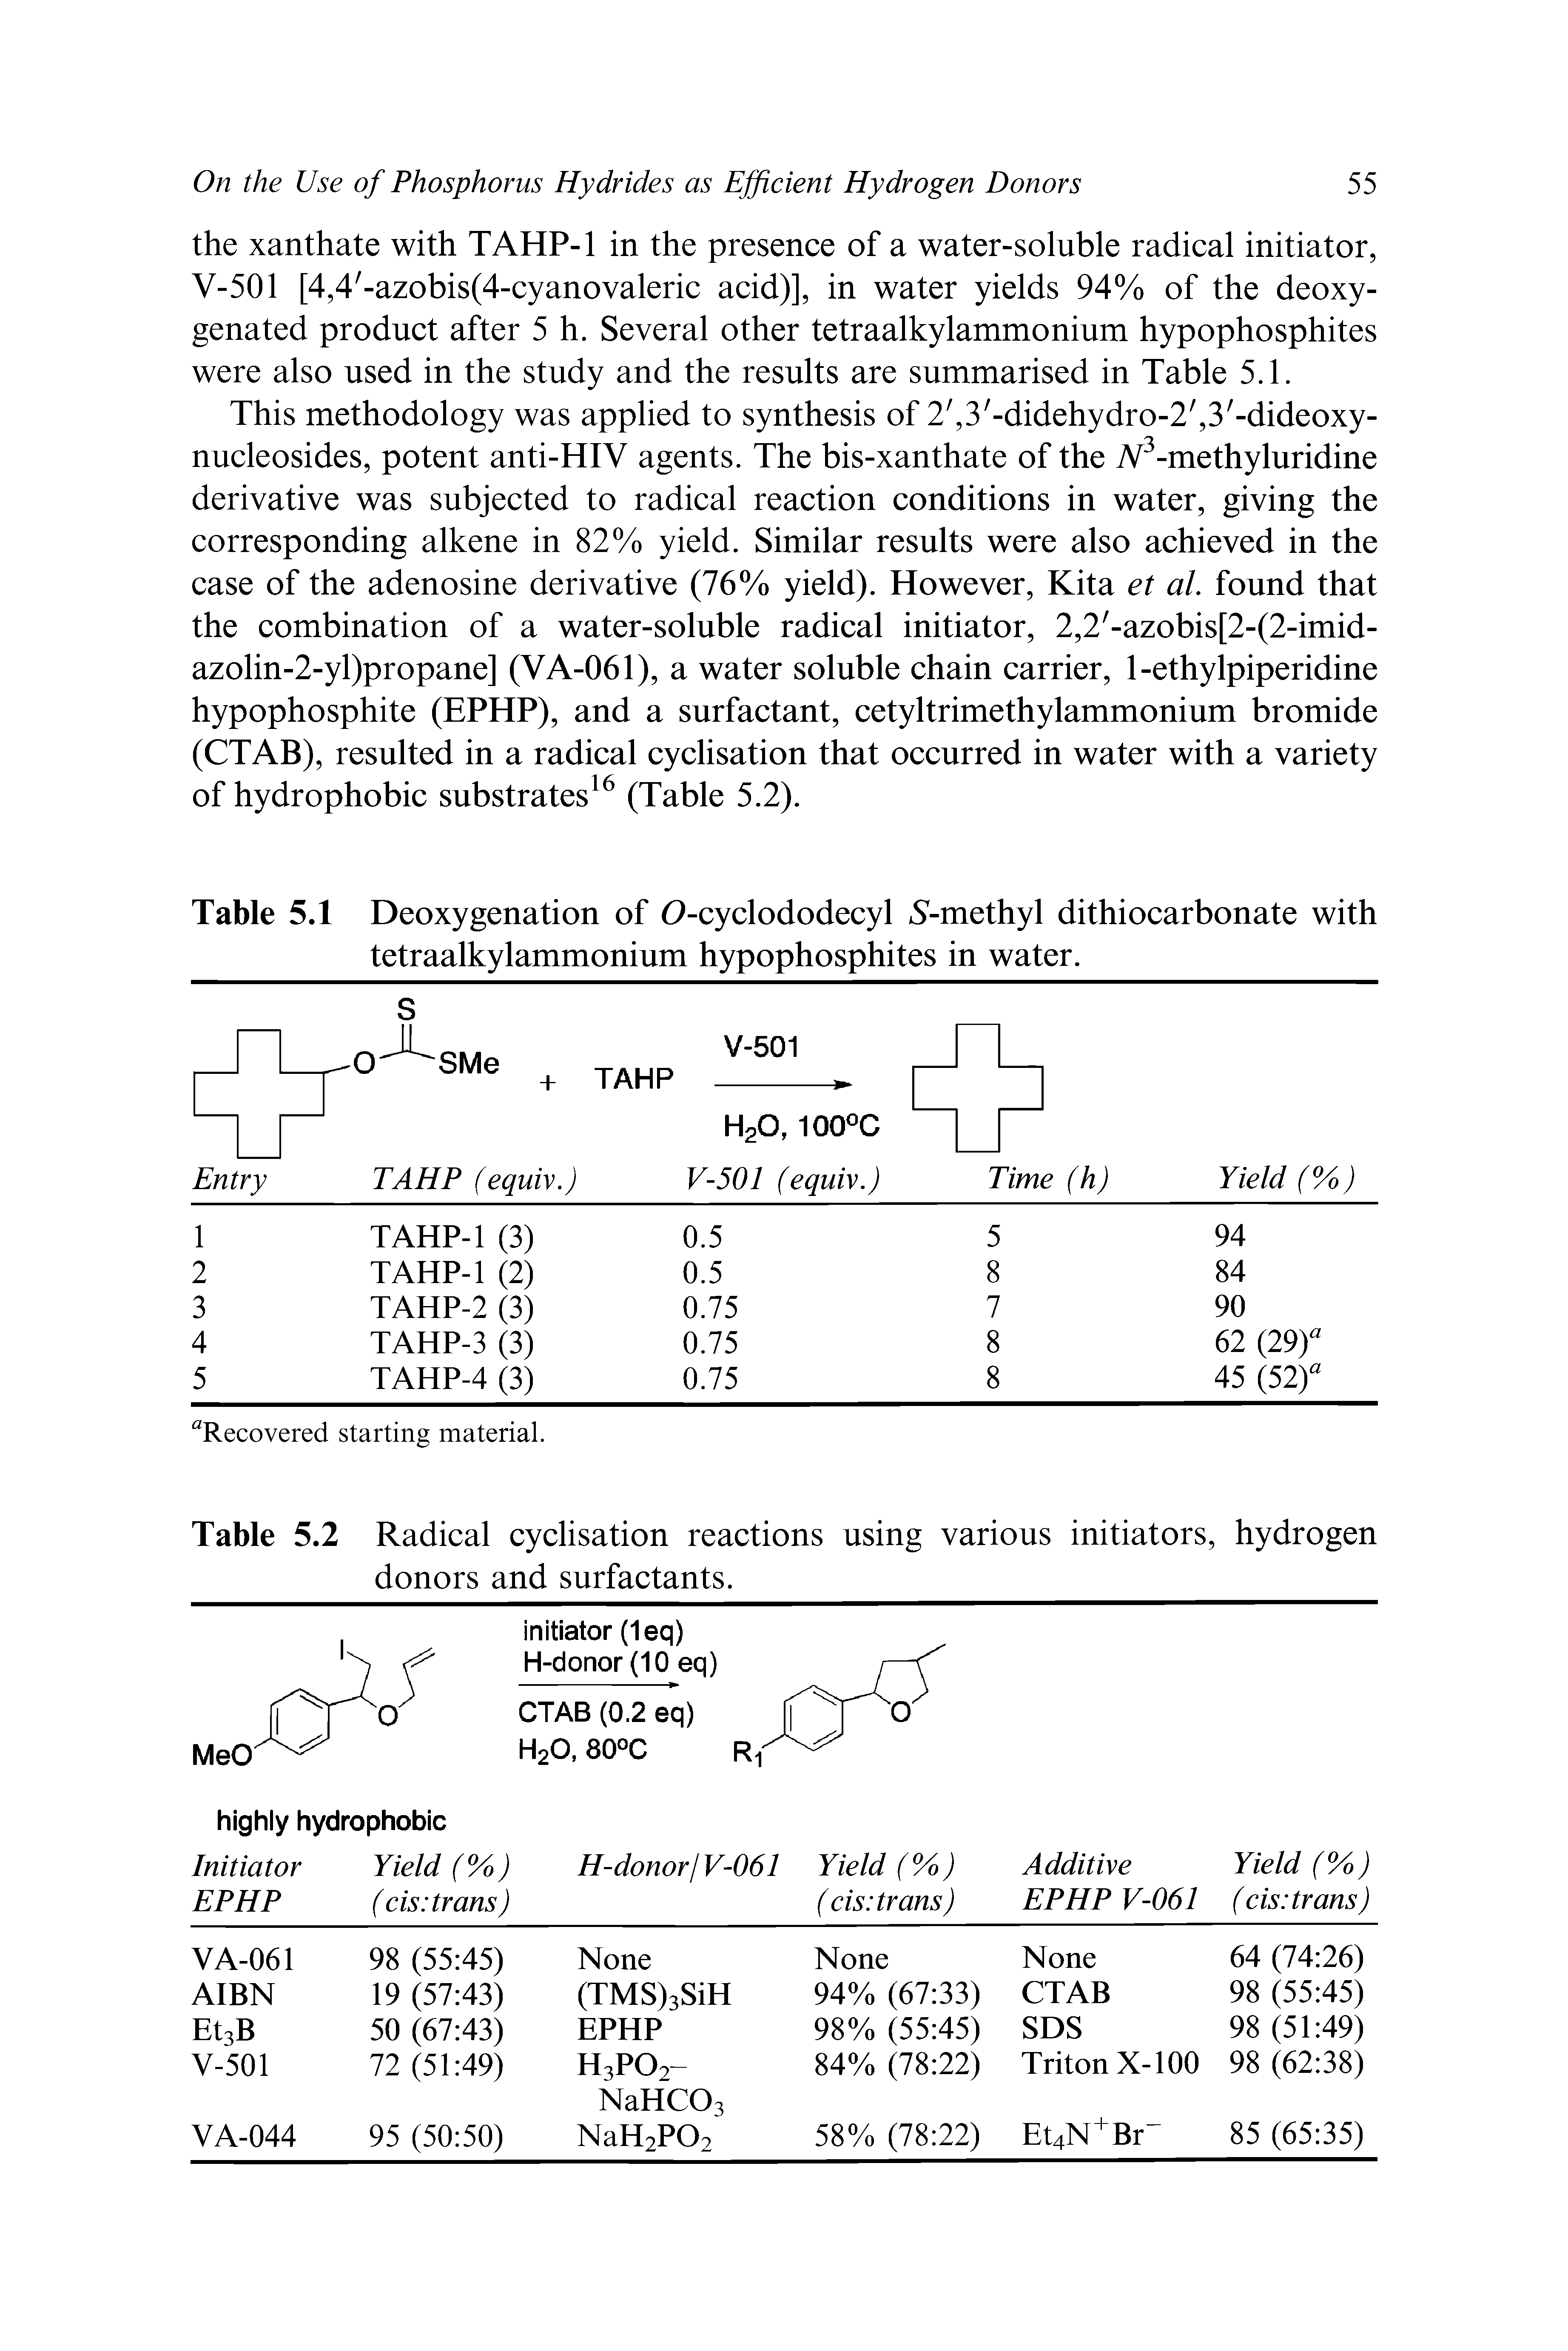 Table 5.1 Deoxygenation of O-cyclododecyl S-methyl dithiocarbonate with tetraalkylammonium hypophosphites in water.